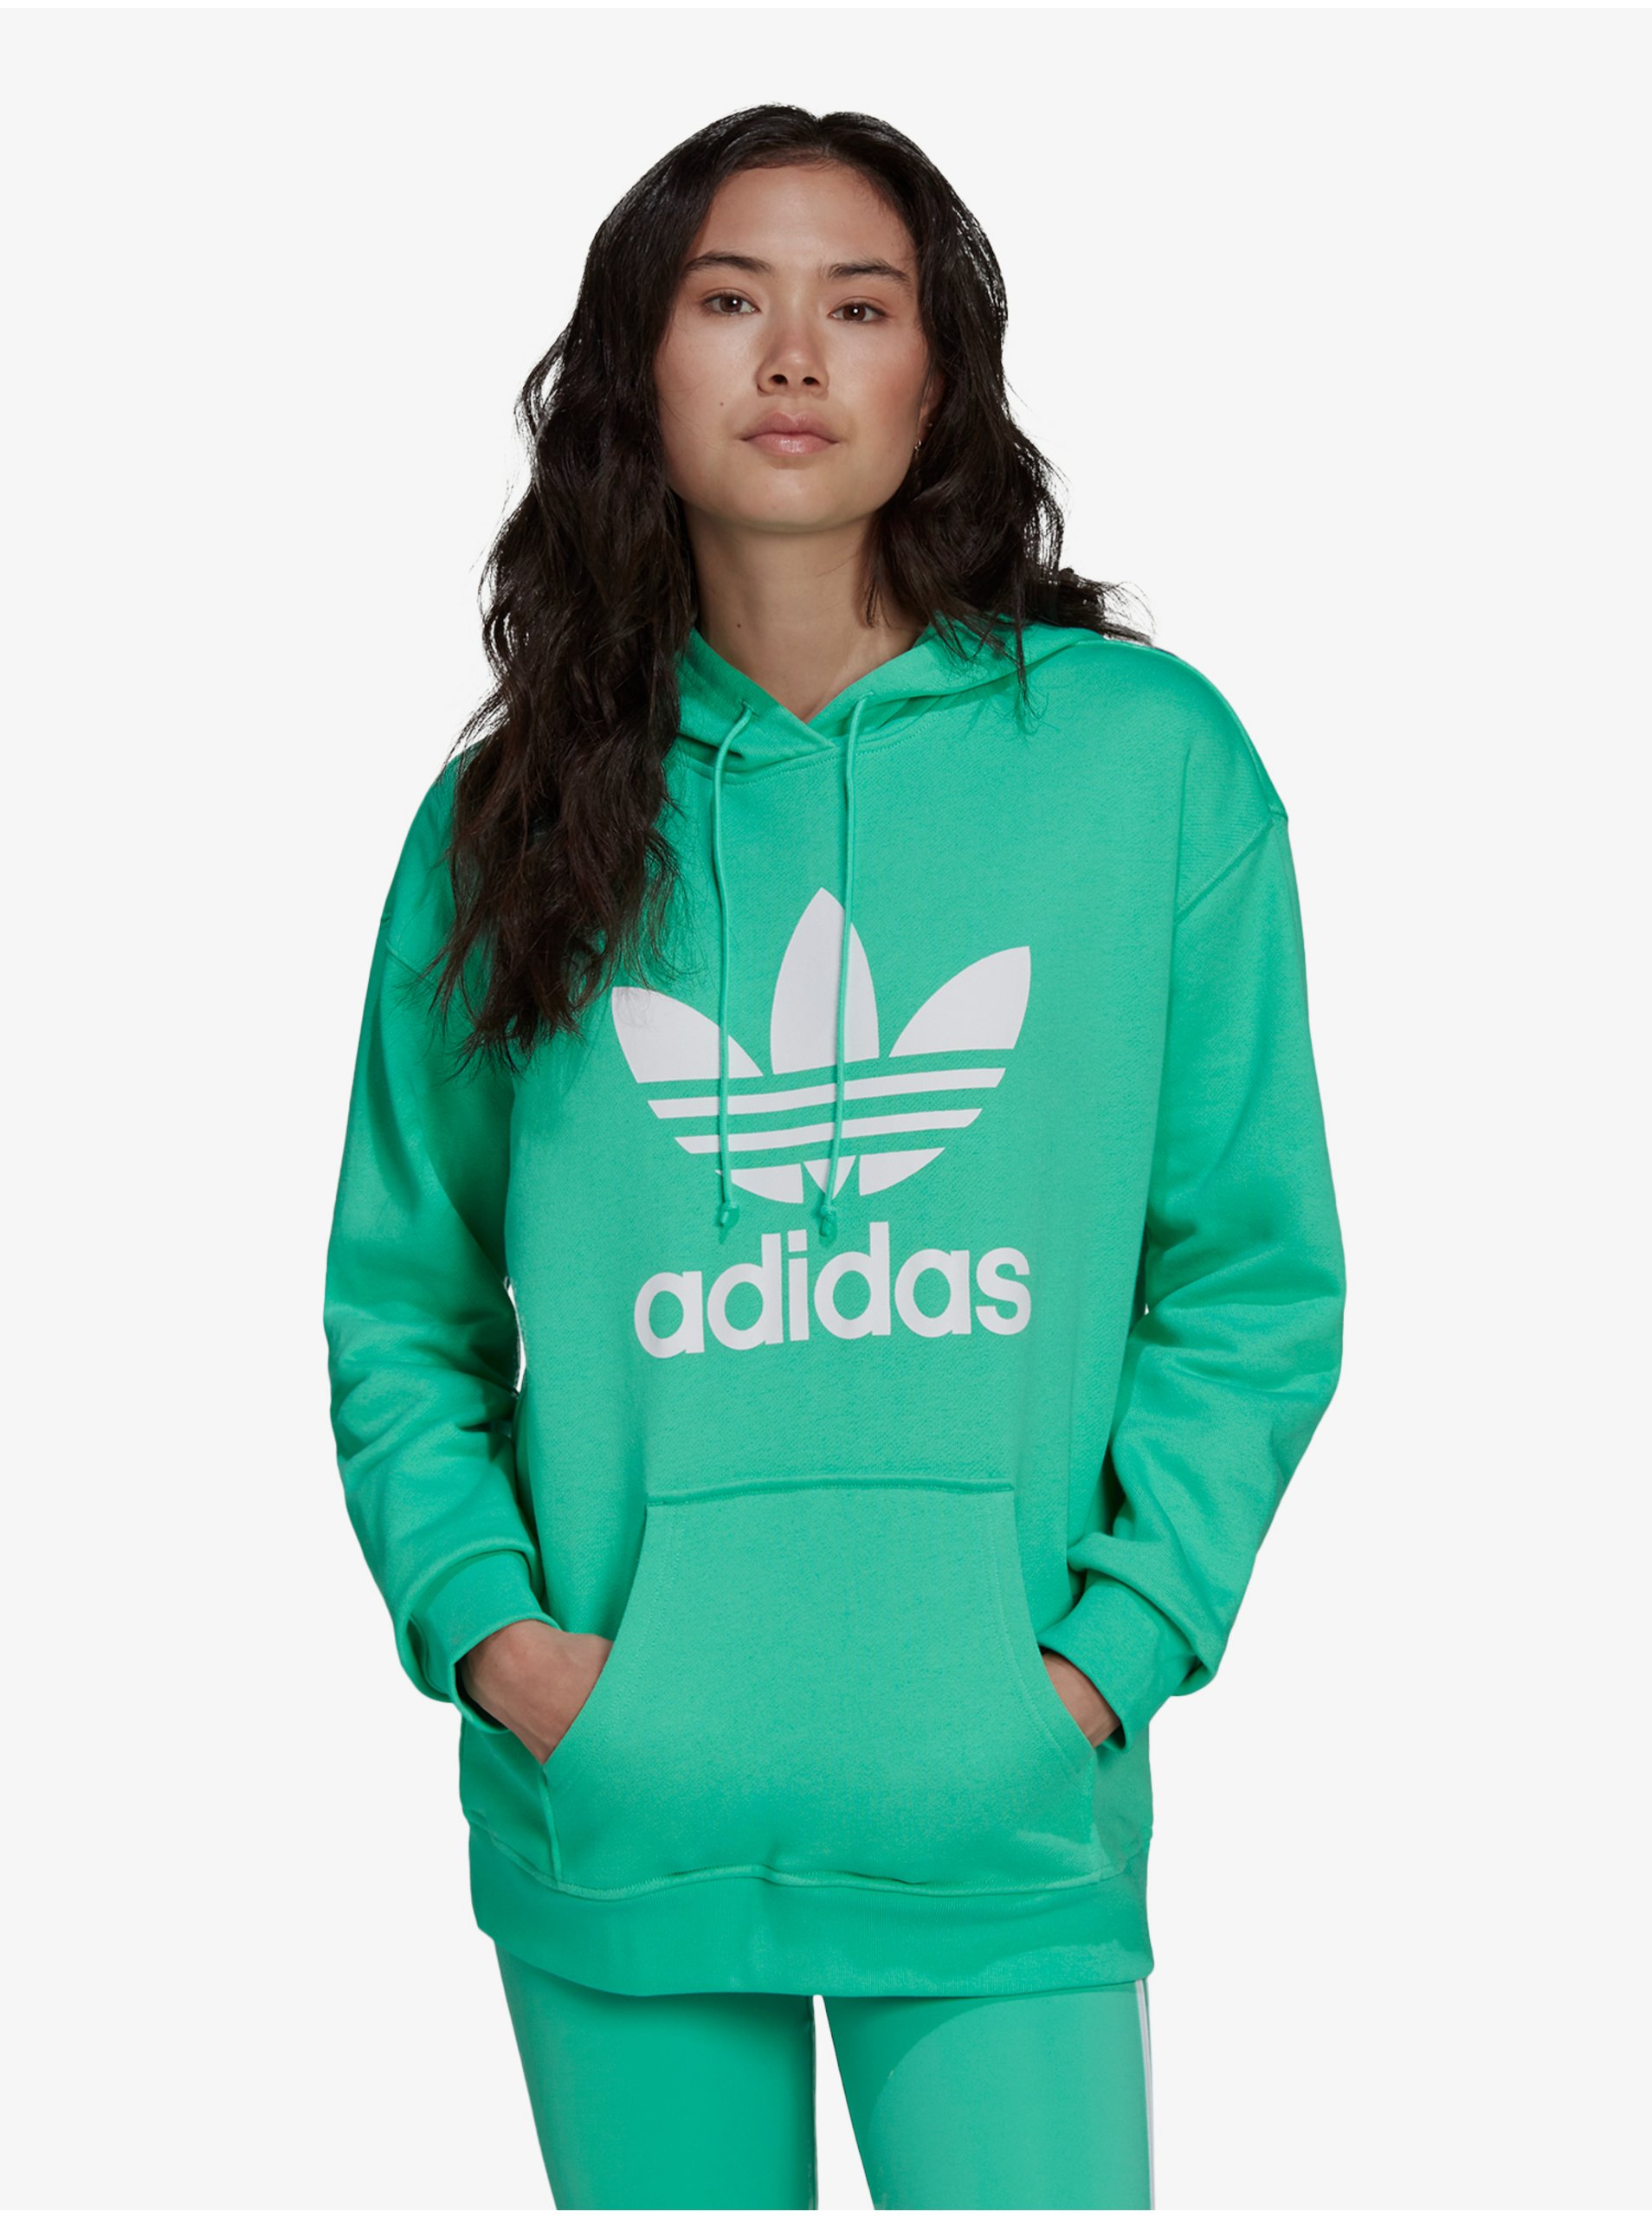 E-shop Zelená dámska vzorovaná mikina s kapucou adidas Originals